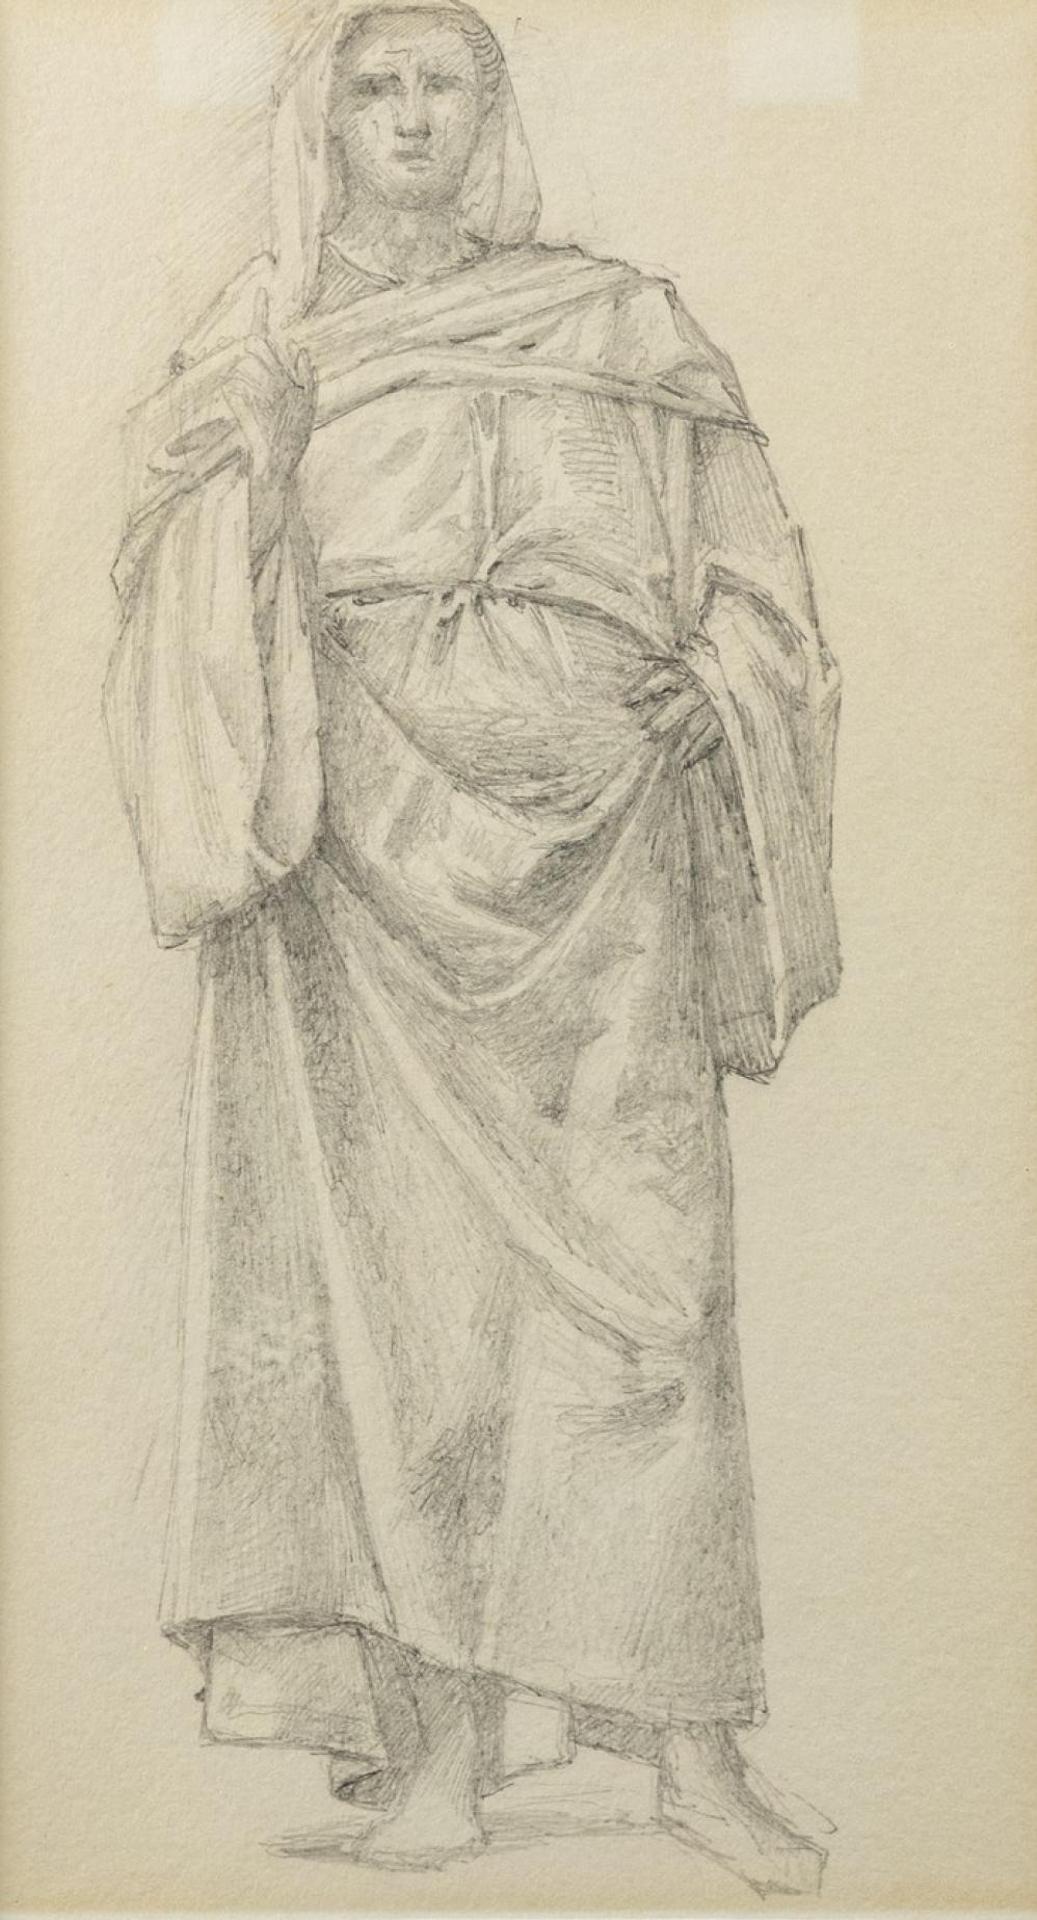 Sir Edward Burne-Jones (1833-1898) - Drawing of a Robed Figure